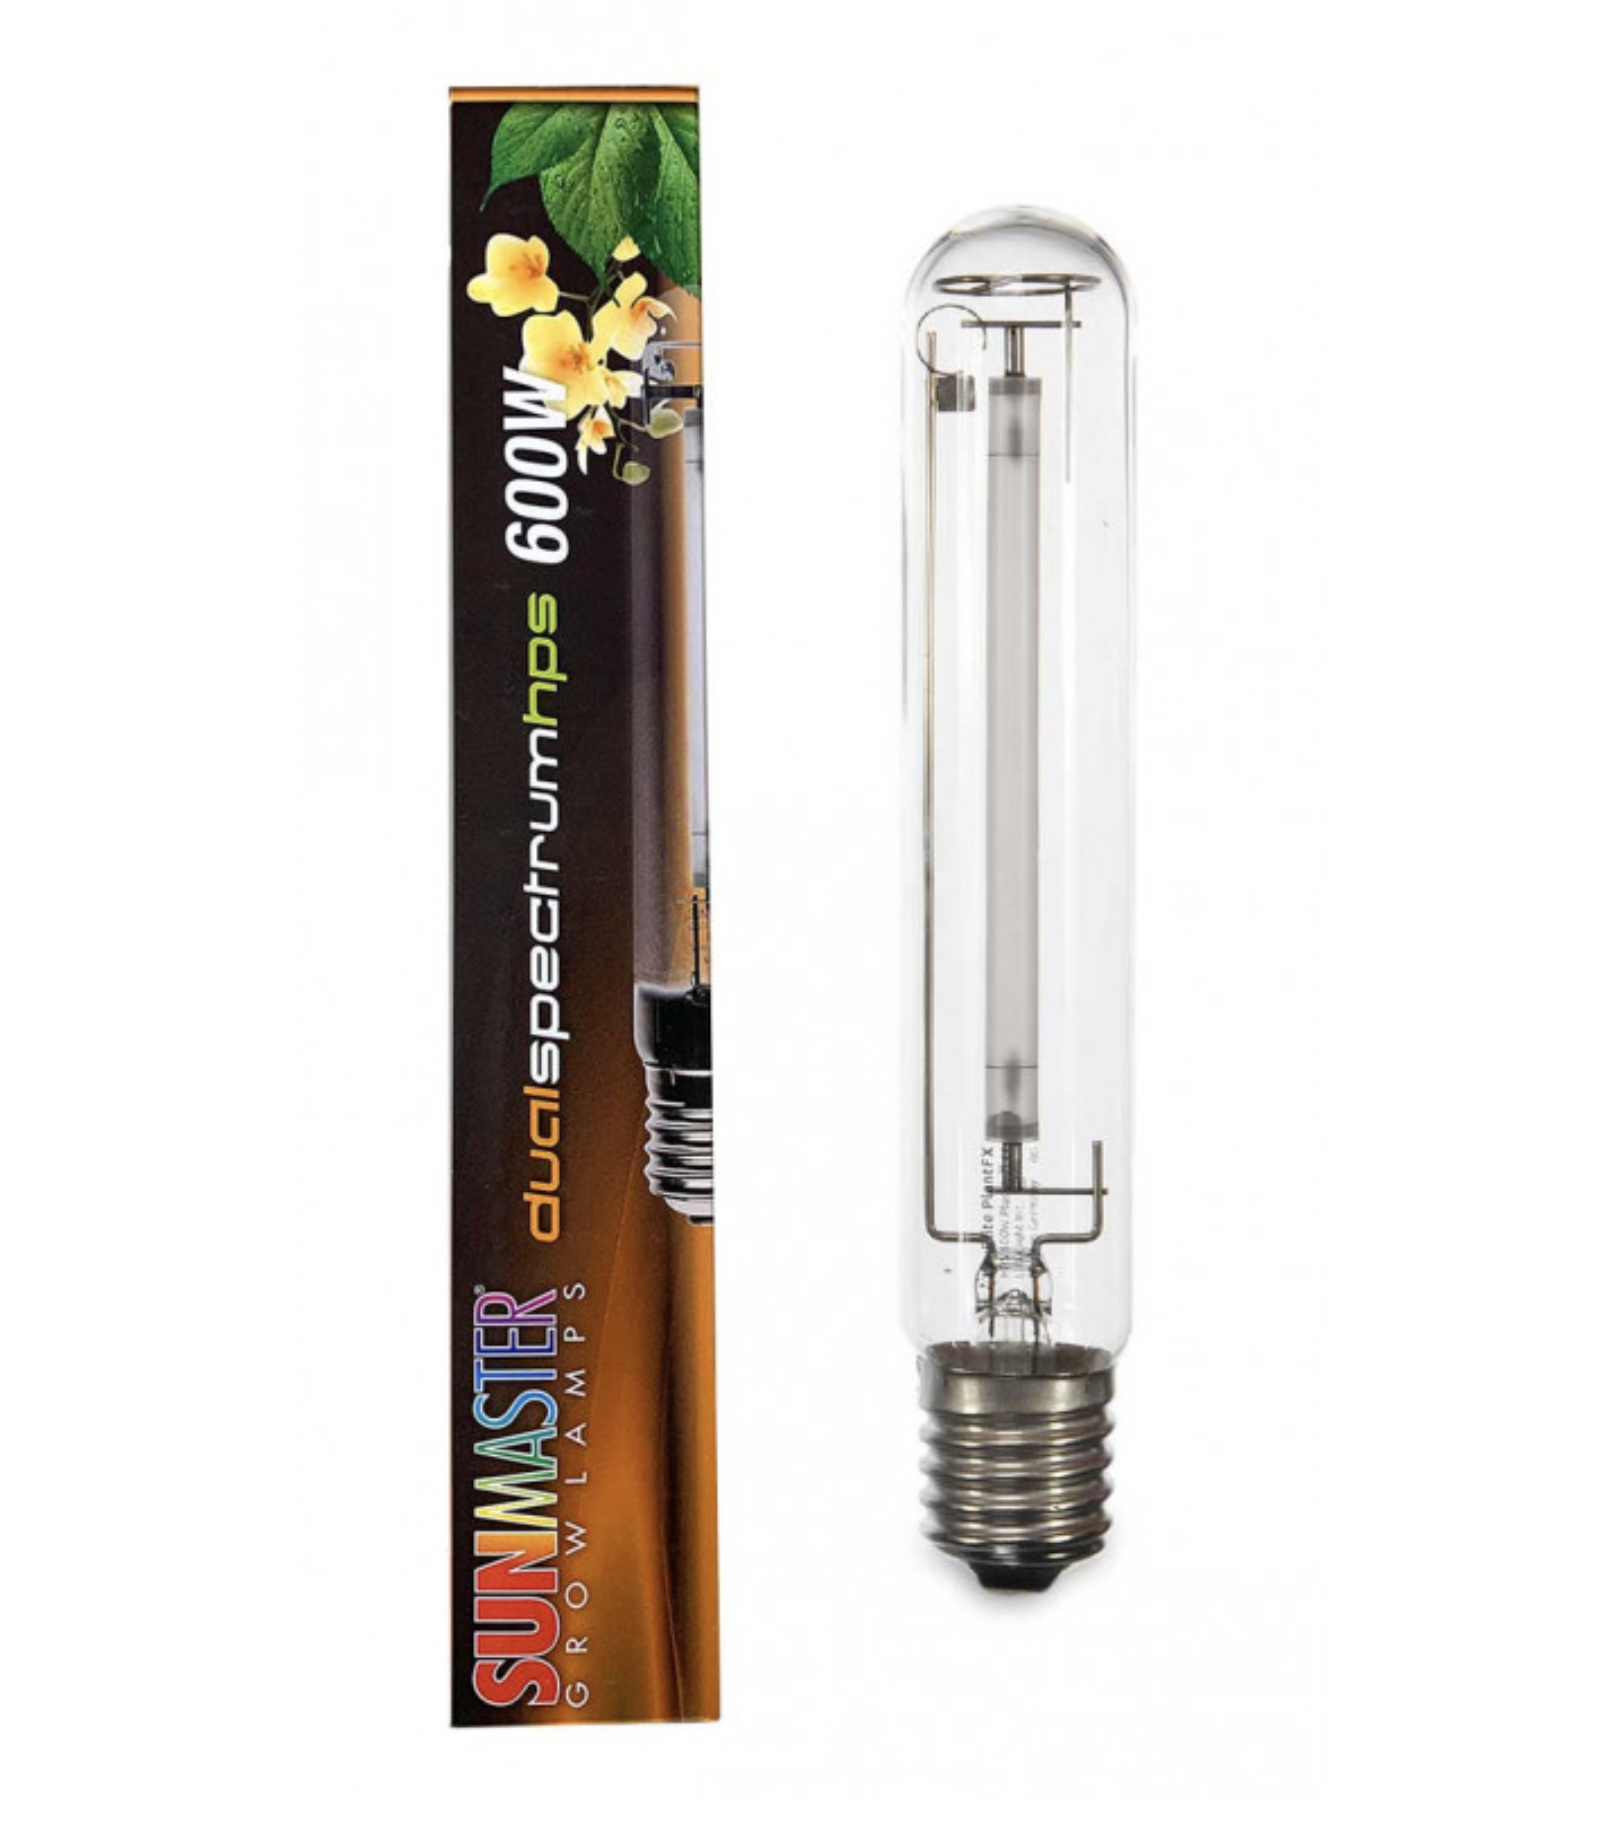 Sunmaster 600W Watt Hps Dual Spectrum Grow Light Bulb Lamp Hydroponic BOX X 12